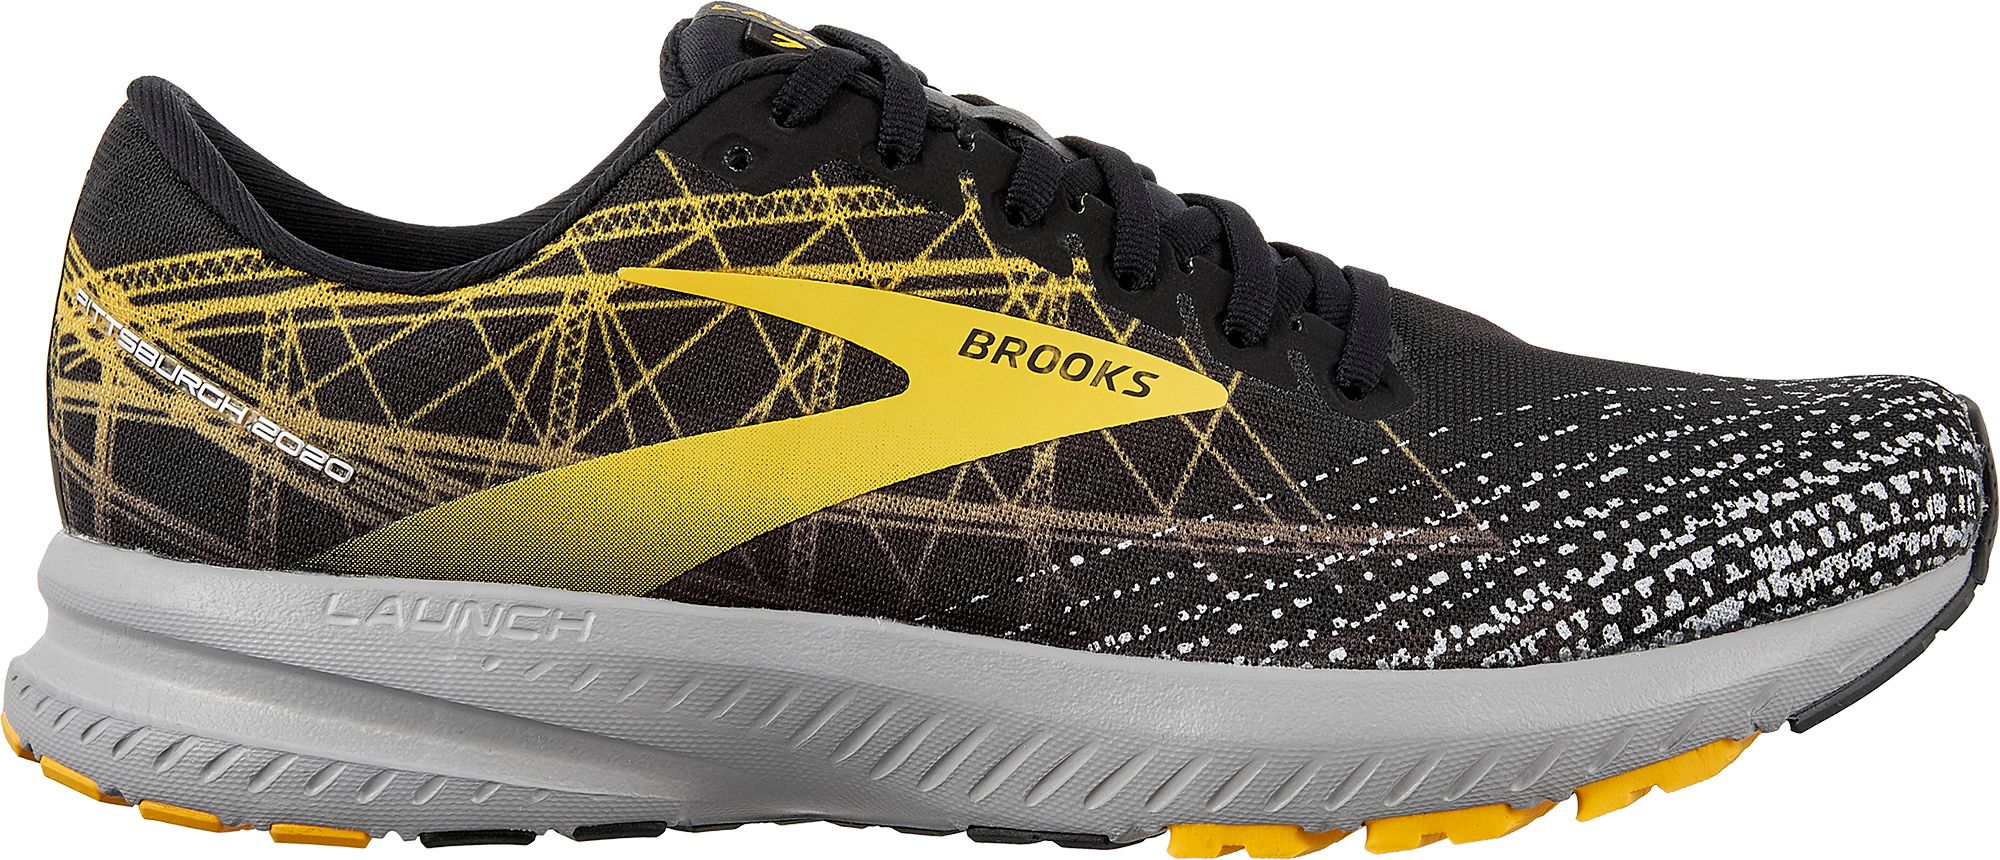 brooks women's pittsburgh launch 6 running shoes